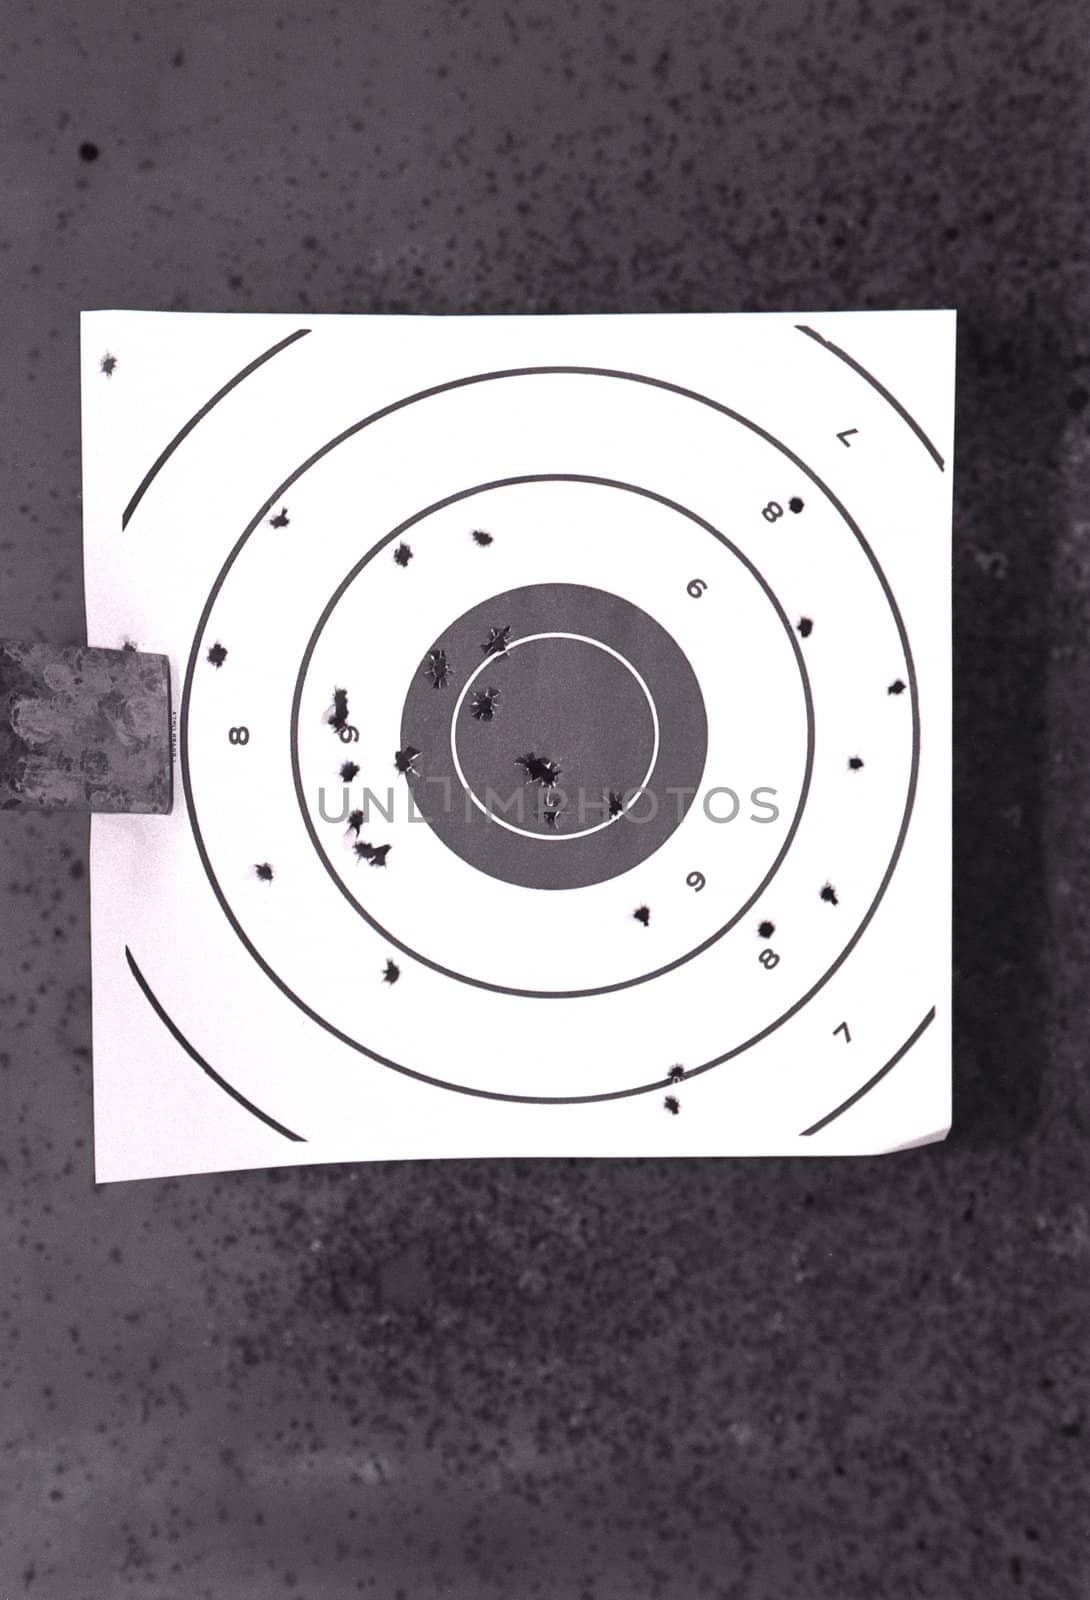 Bullseye target with bullet holes
